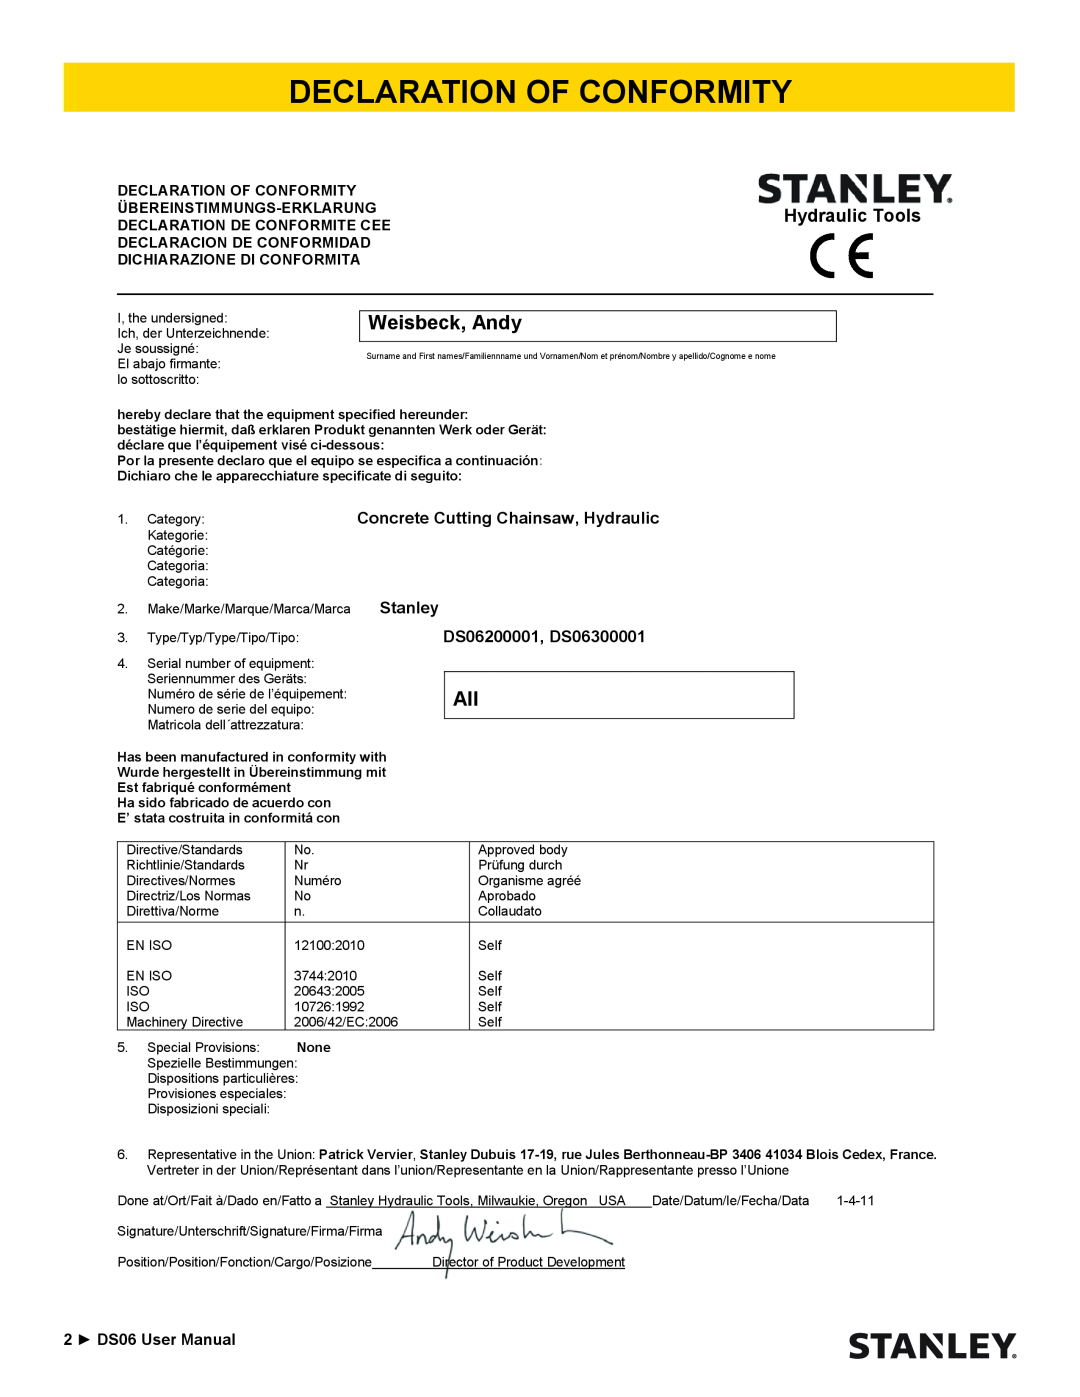 Stanley Black & Decker DS06 Declaration Of Conformity, Weisbeck, Andy, Concrete Cutting Chainsaw, Hydraulic, Stanley, None 